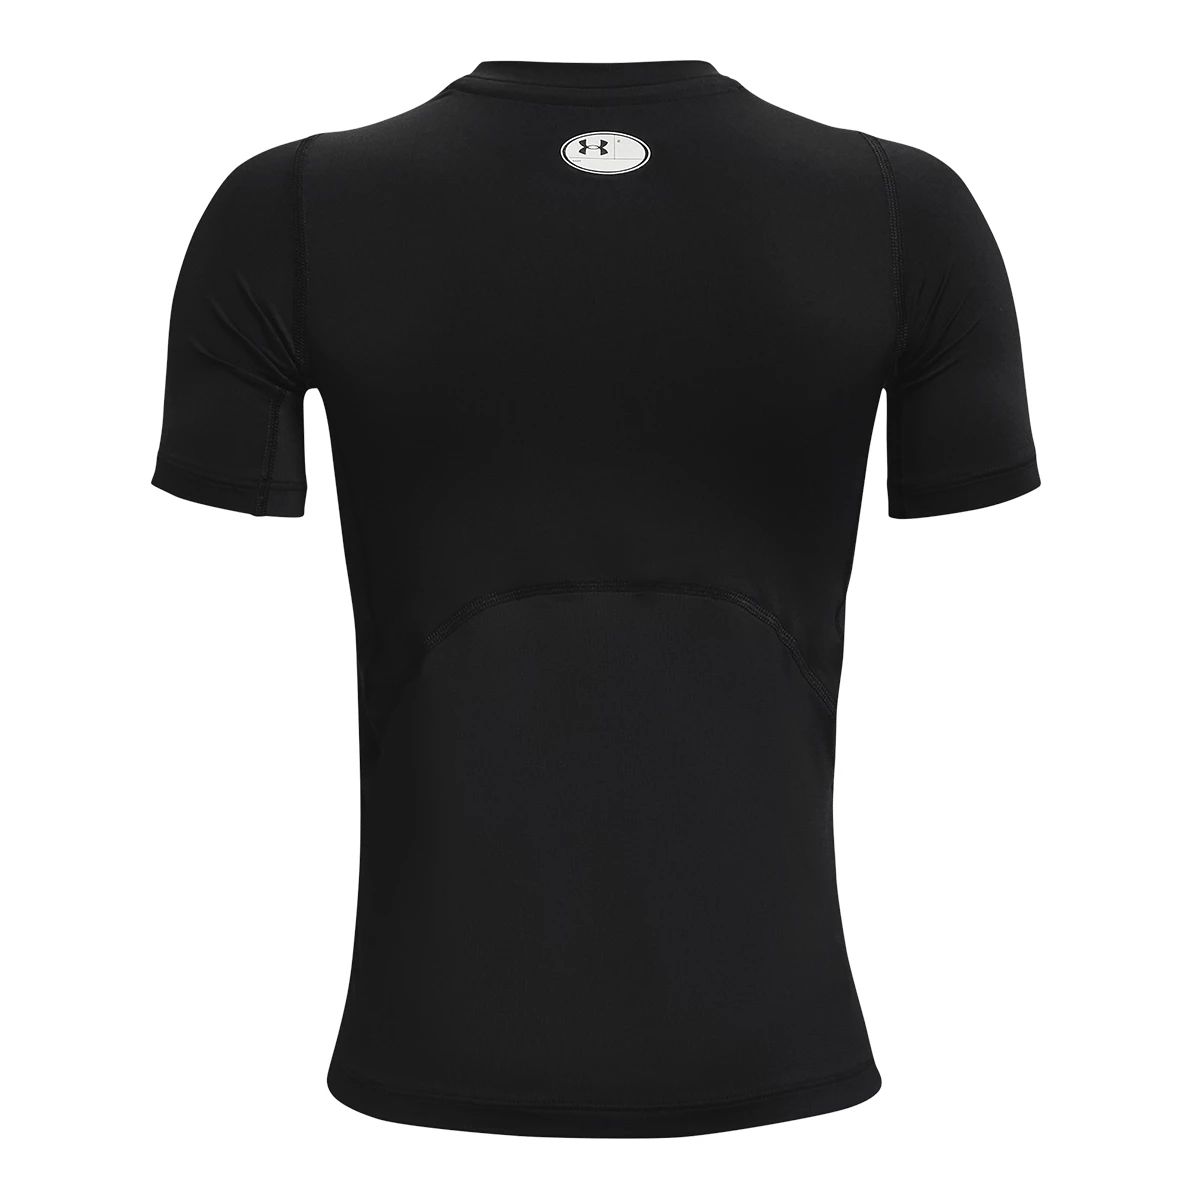 Men's UA Heatgear Armour Compression Shirt - Black/Steel, XXXXL